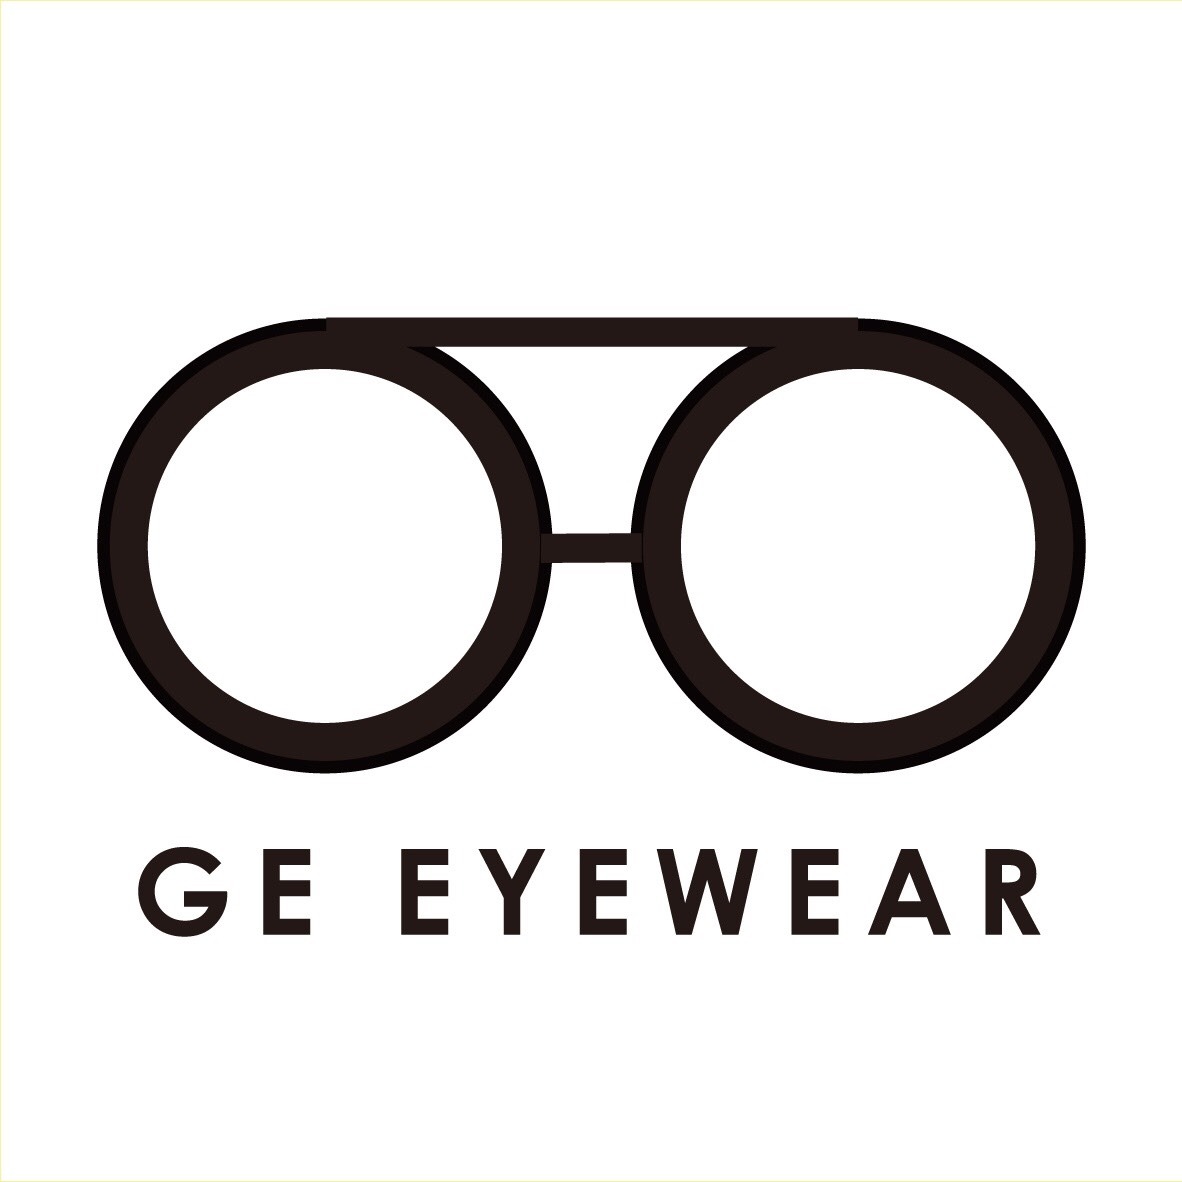 GEeyewear